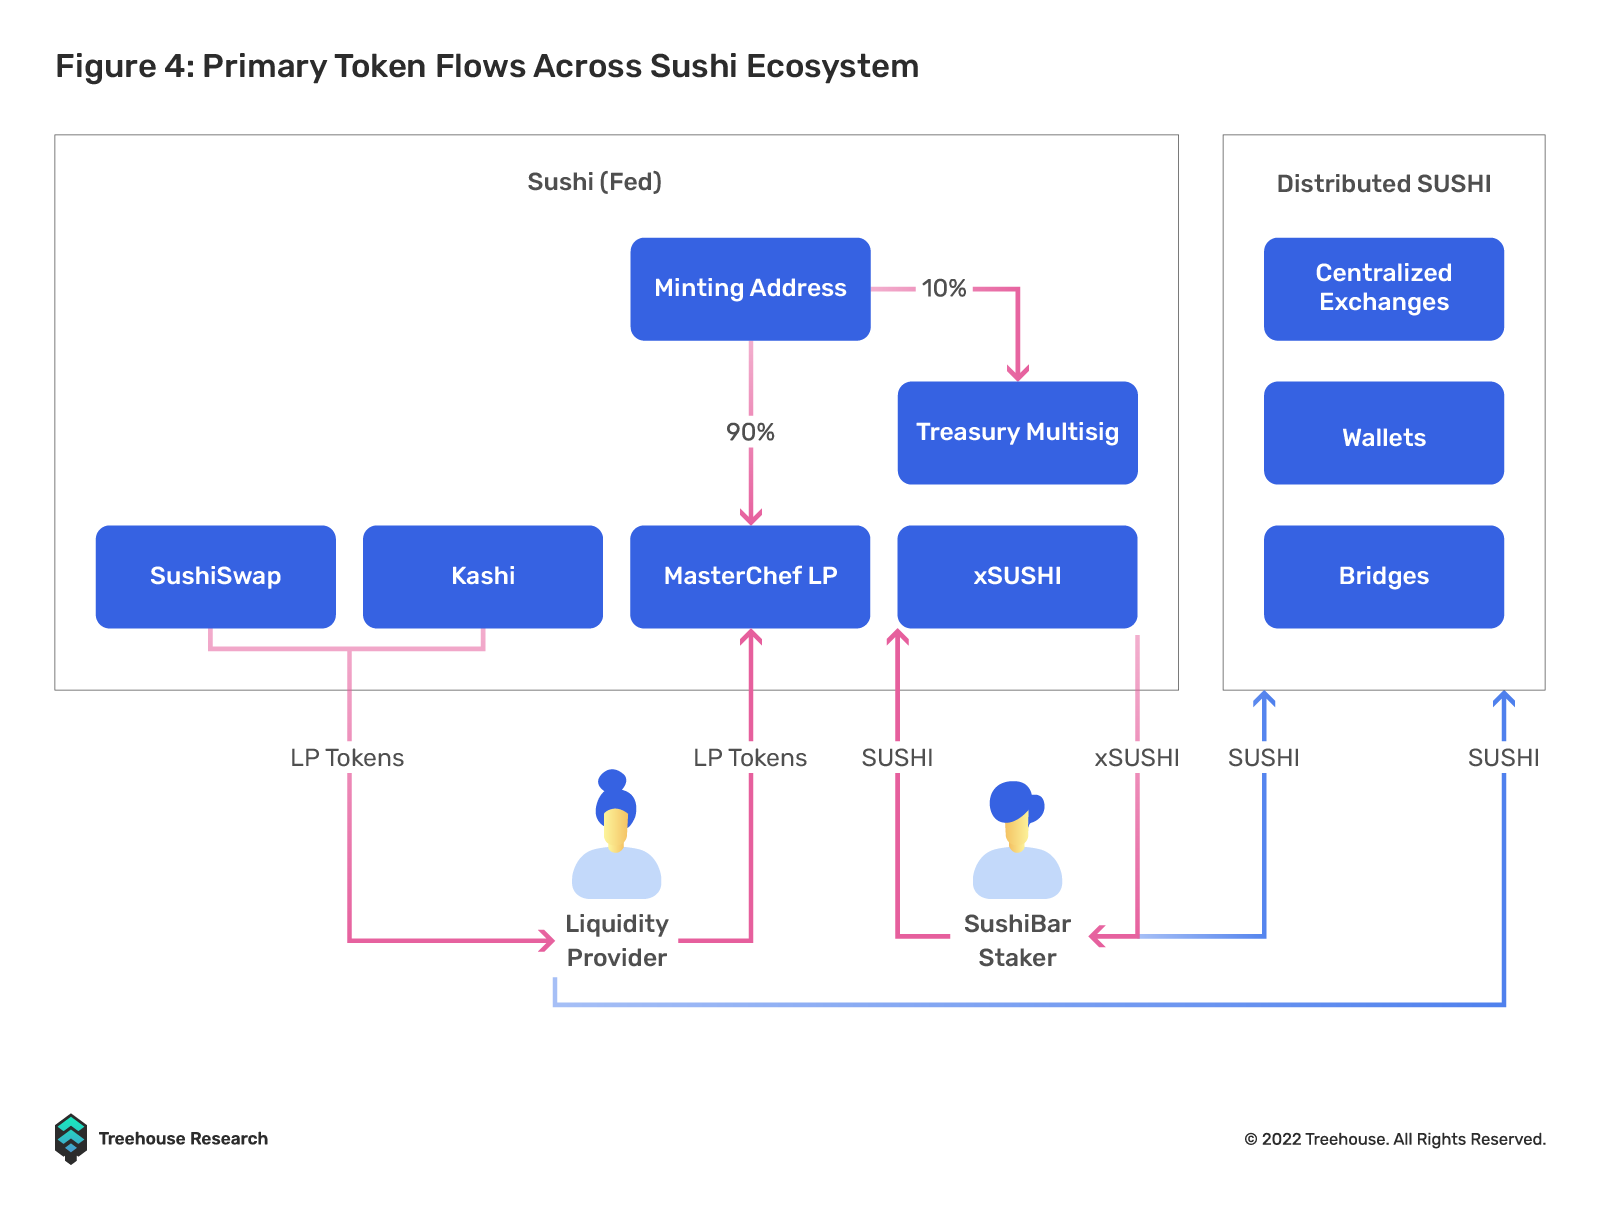 Primary token flows across Sushi ecosystem 